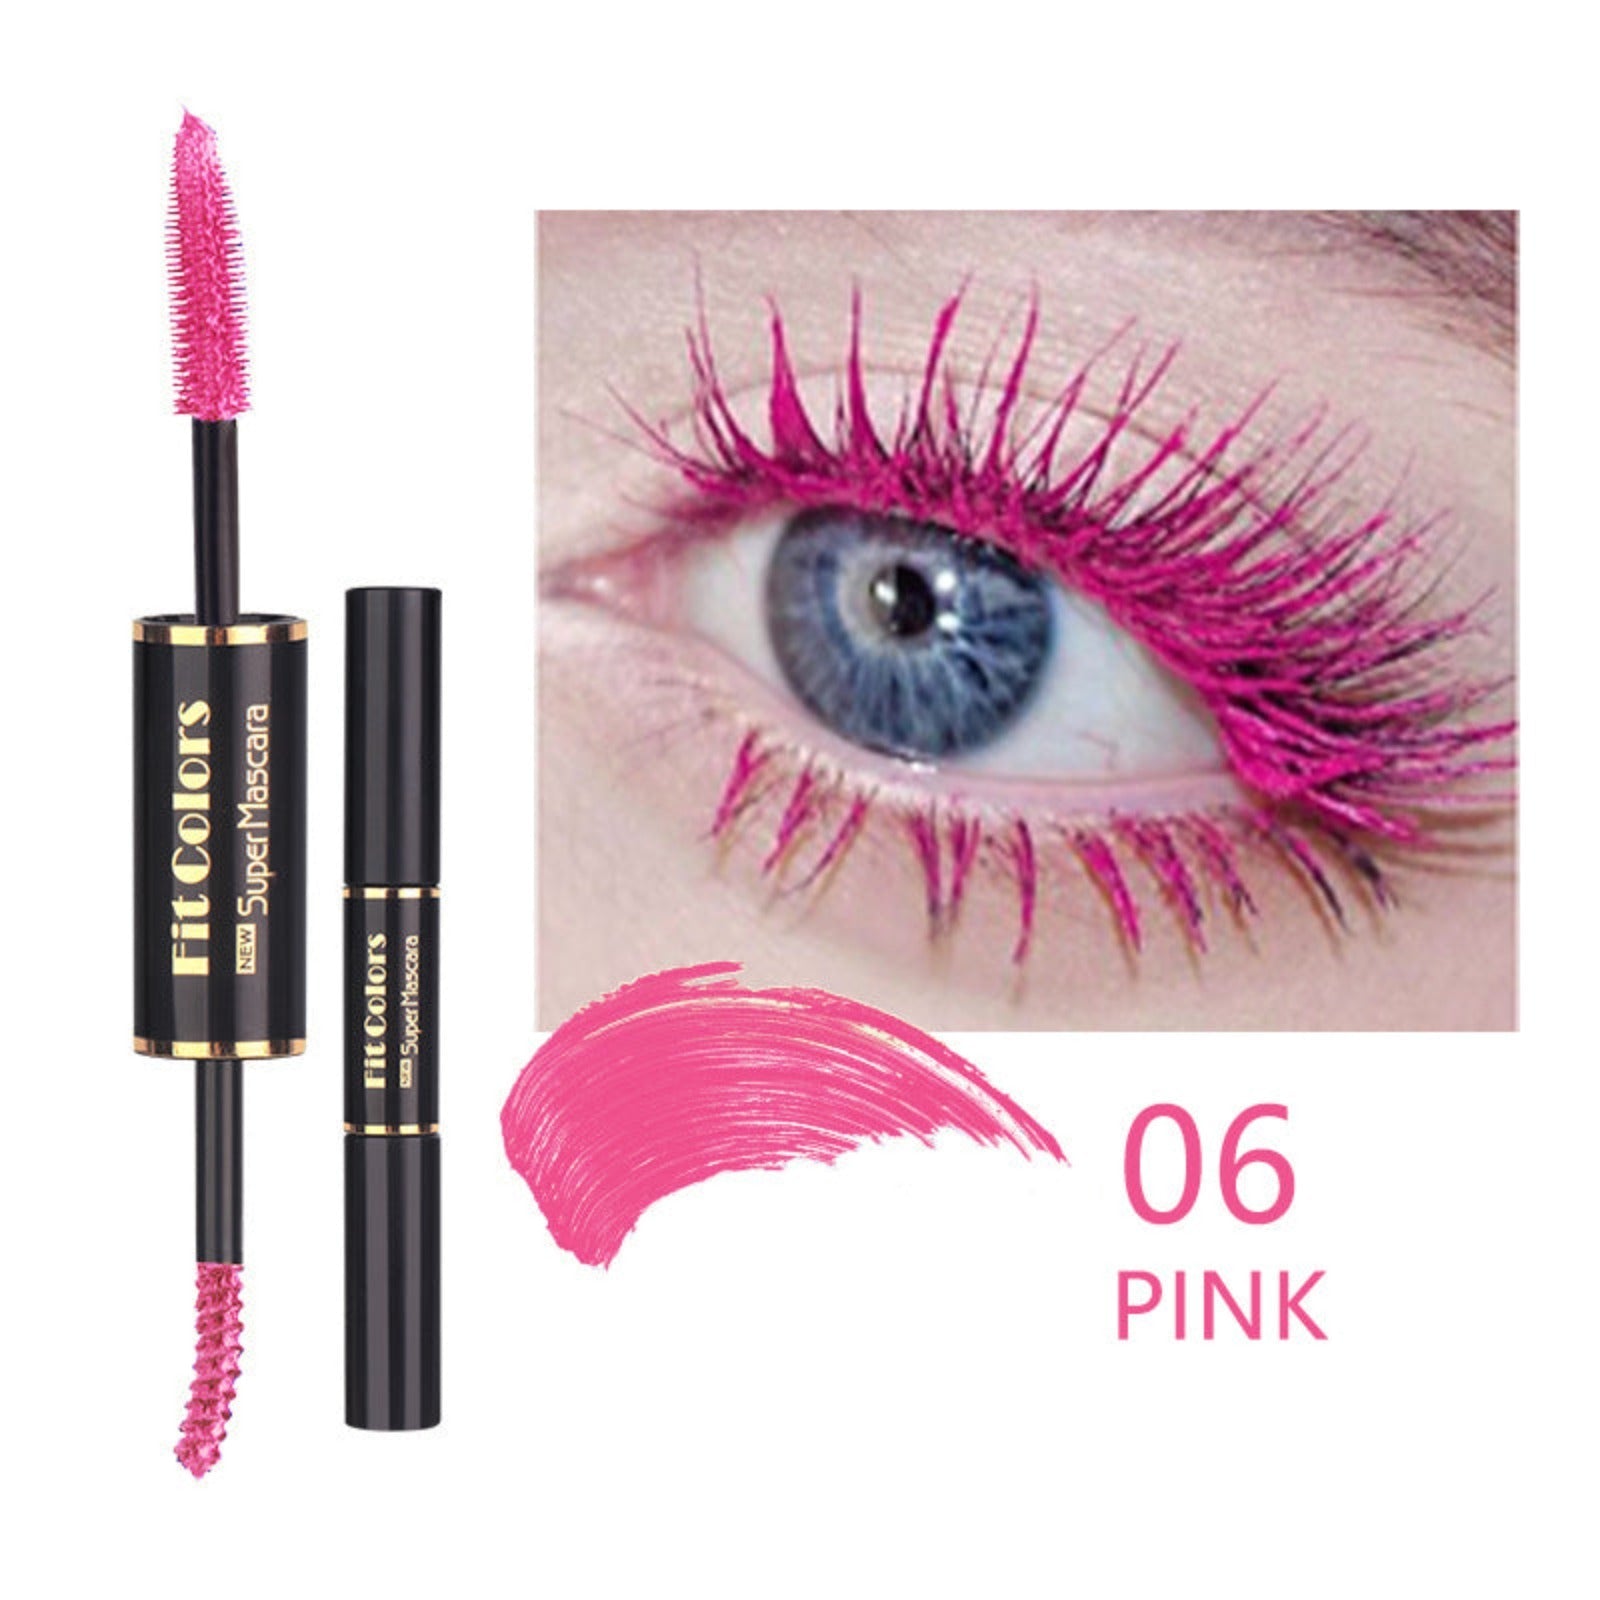 Double-Headed Color Mascara - Bold Beauty Defined LA ROSE BEAUTY